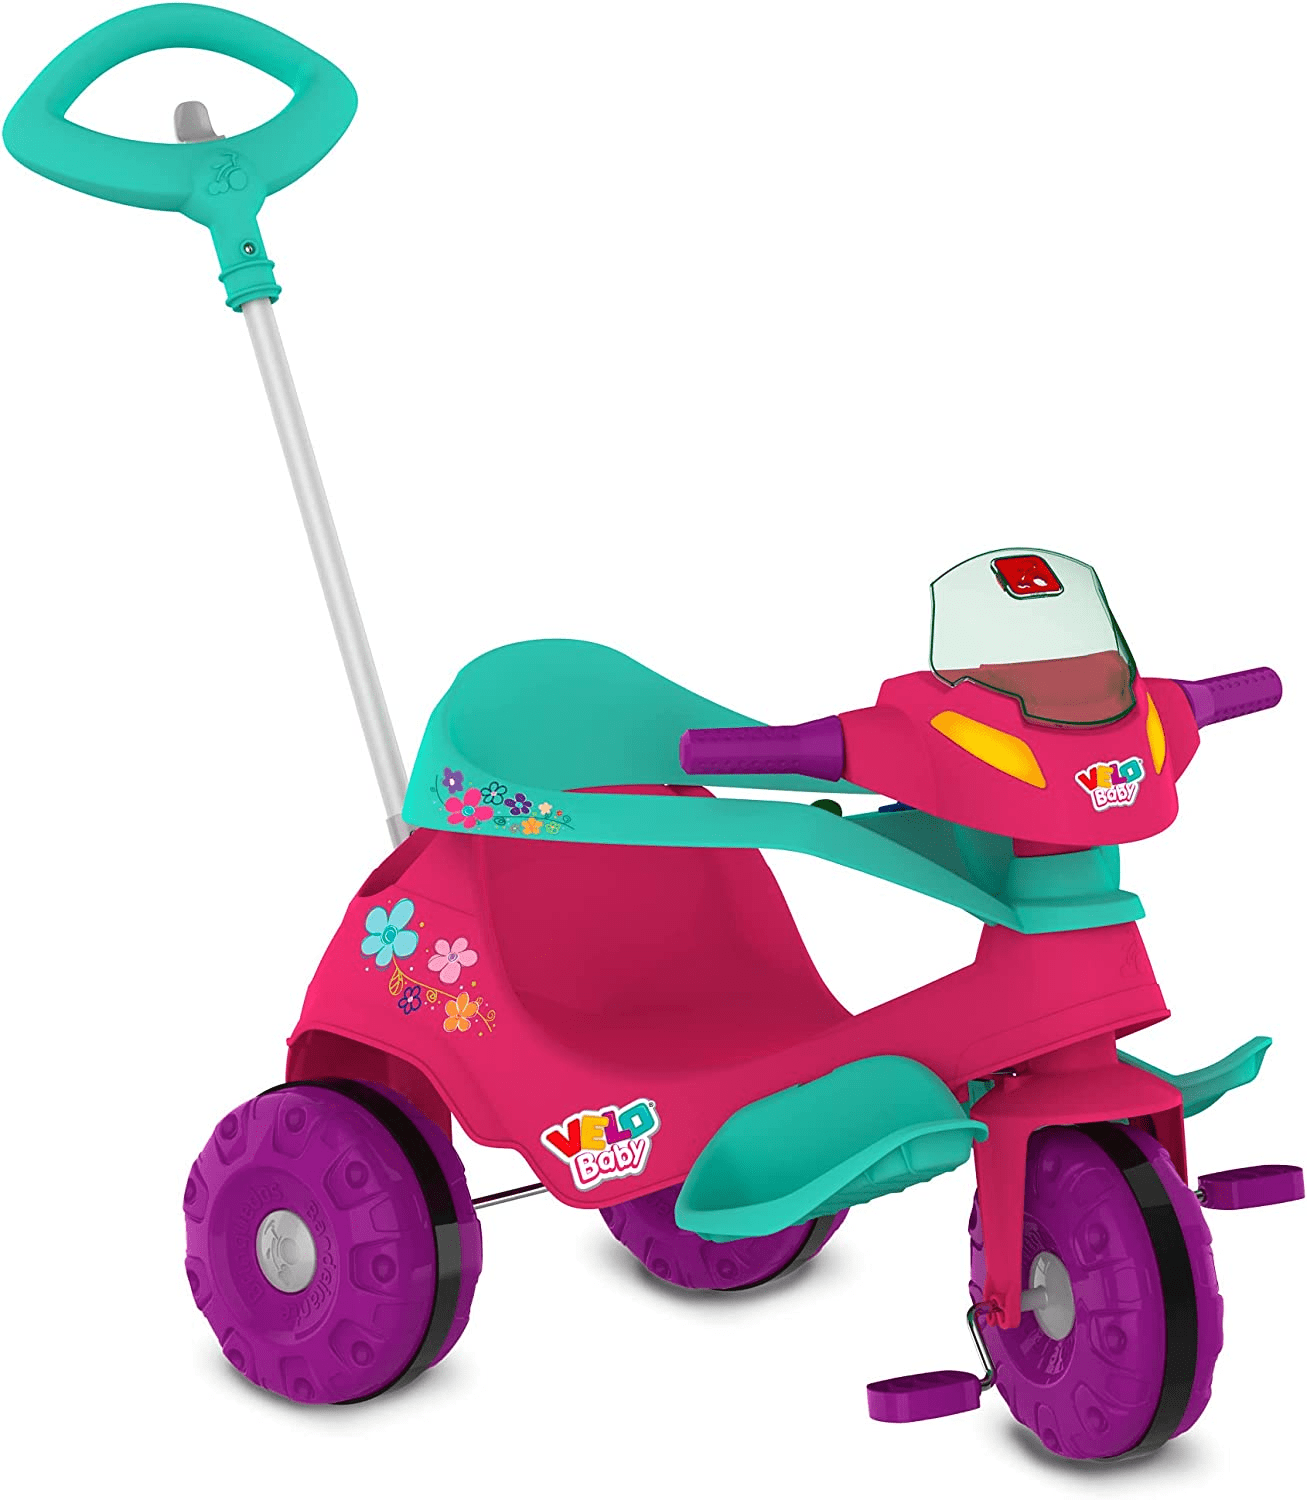 Motoca Velotrol Infantil Tico Tico Meninas Rosa Pink Nathor